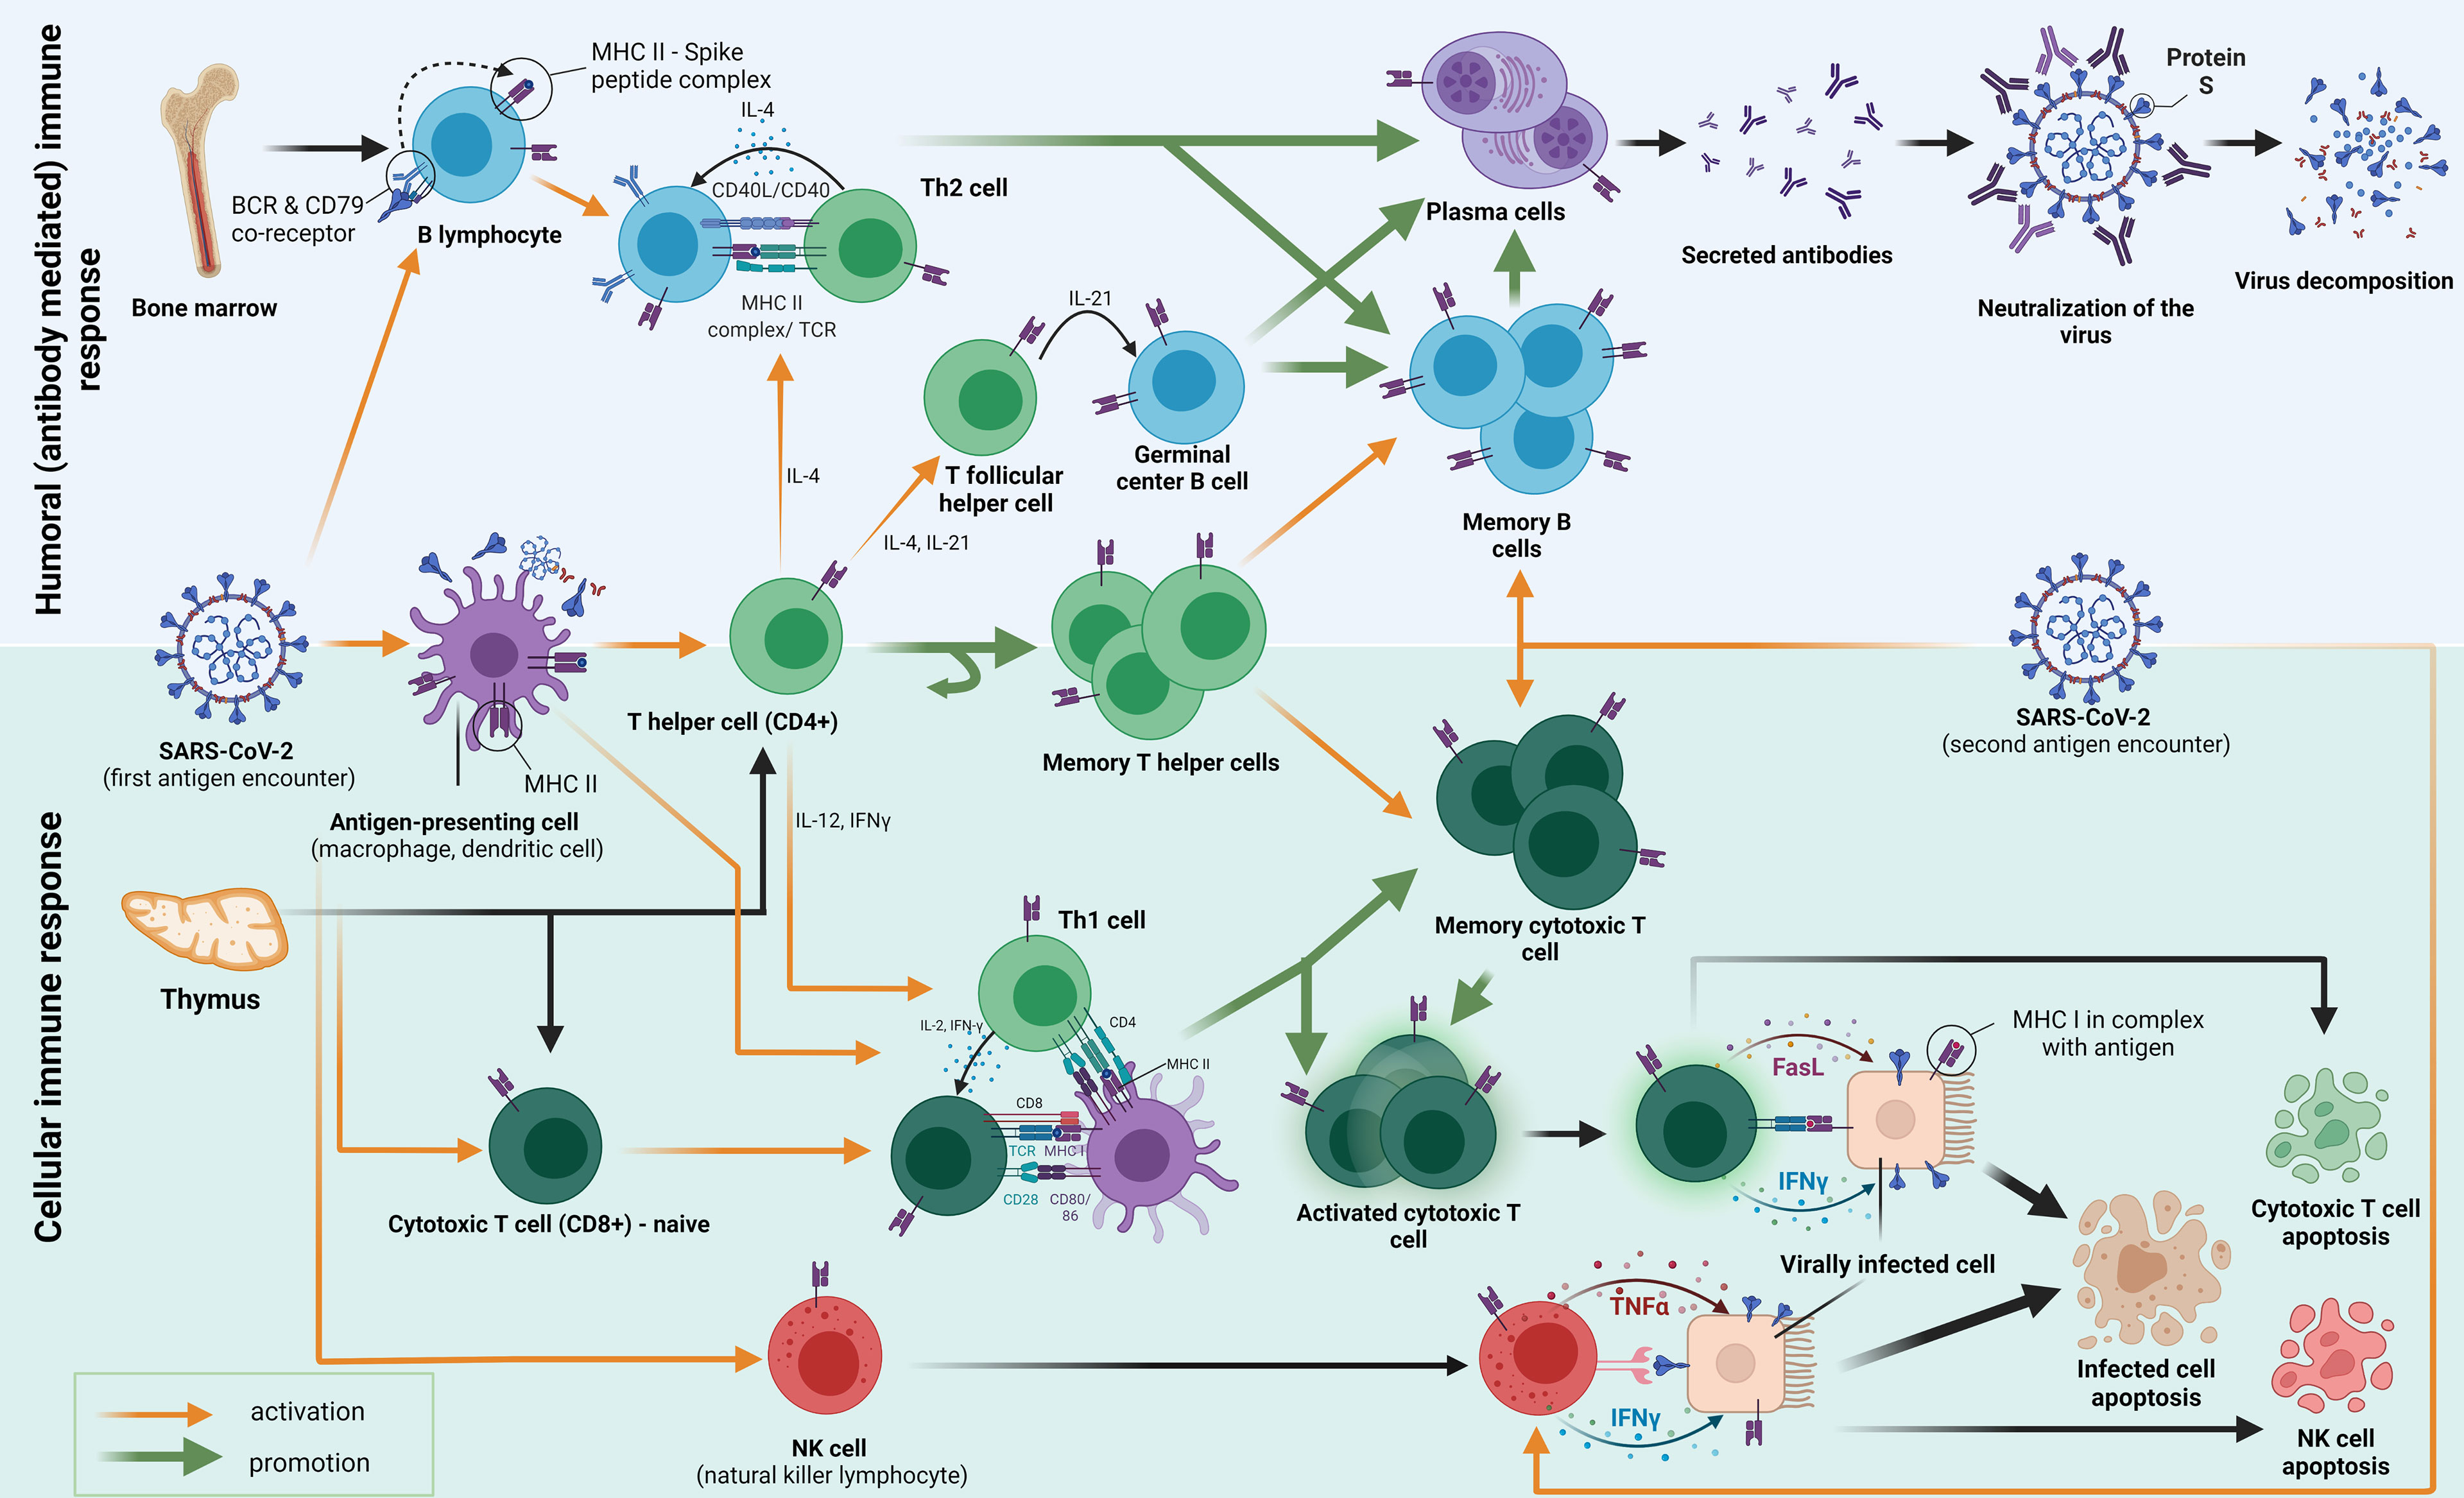 Immune system activation